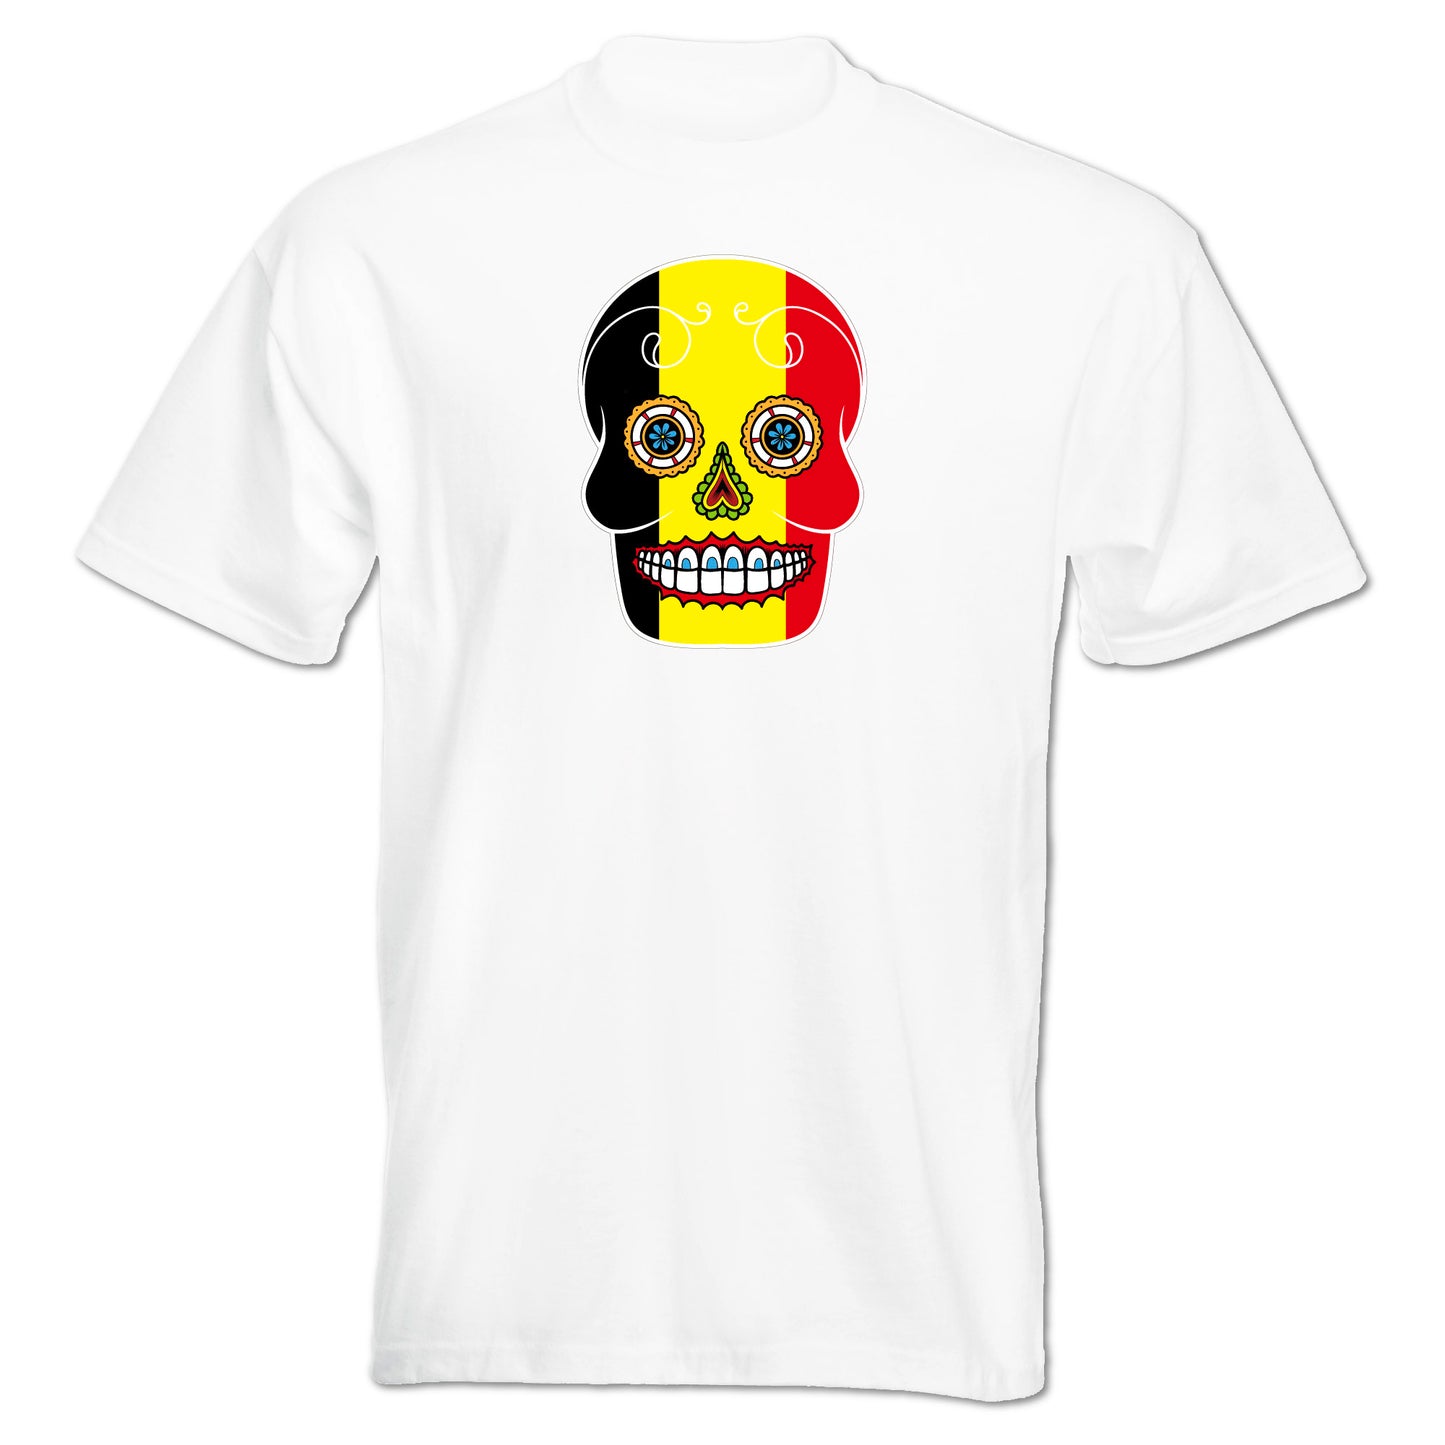 INDIGOS UG - T-Shirt Herren - Belgien - Skull - Fussball